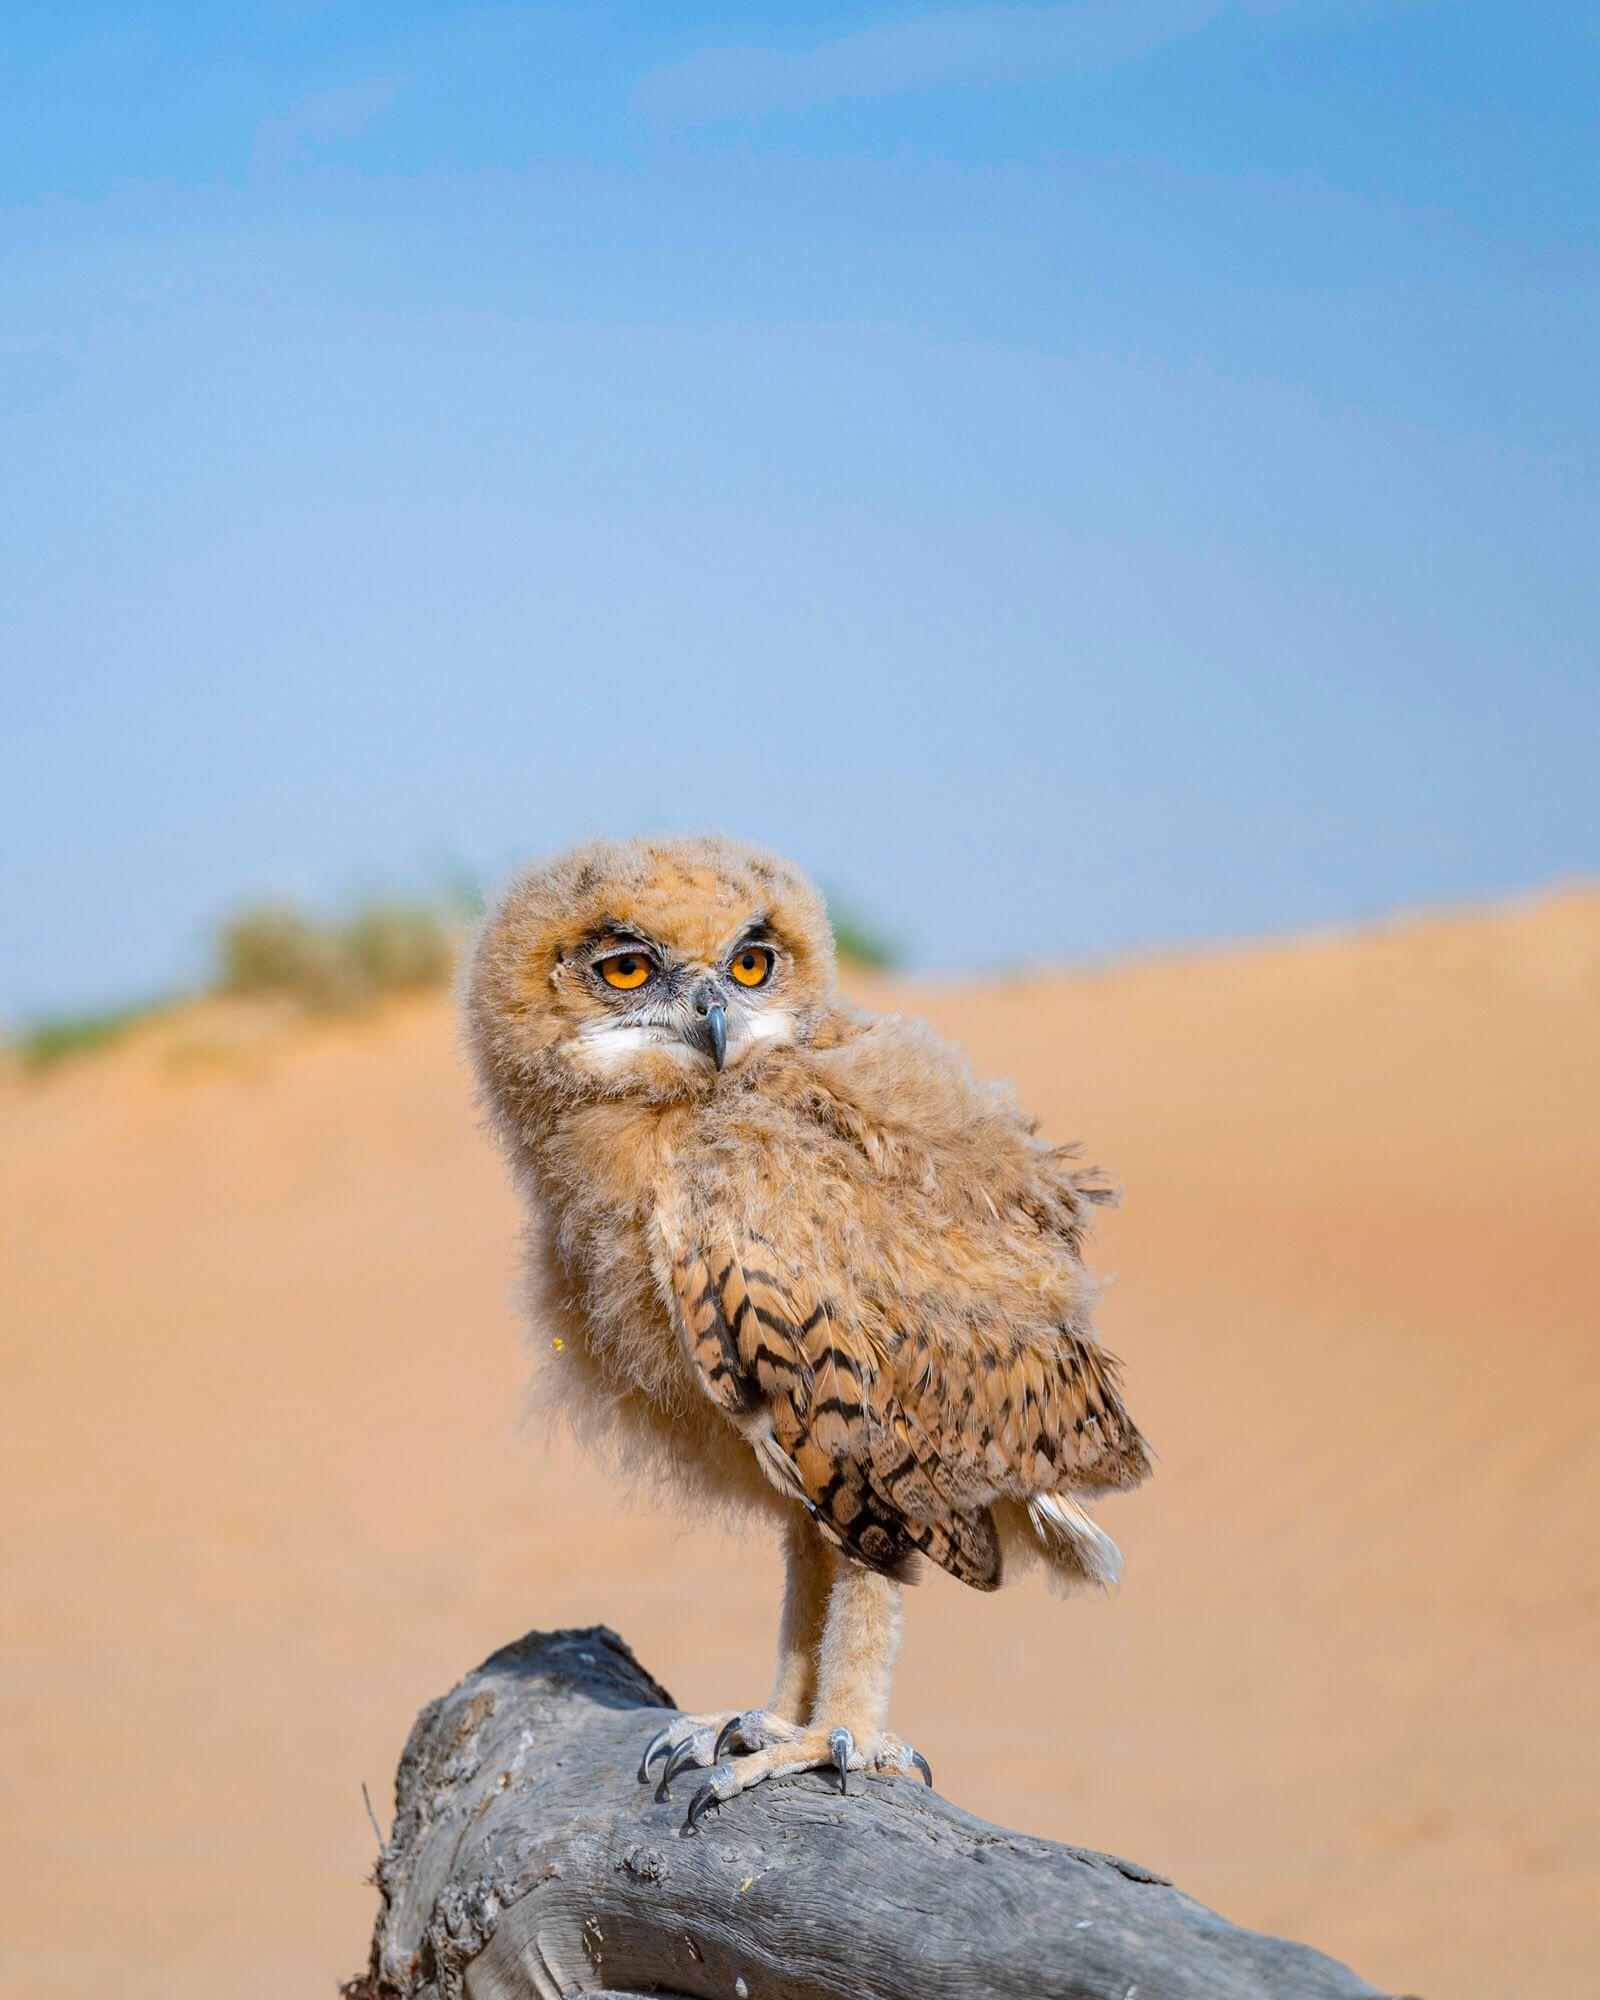 A Desert Eagle Owl out of the nest as they begin to explore flight. Photographer: Ali bin Thalith. Location: Al Qudra Lake, Dubai, United Arab Emirates. 